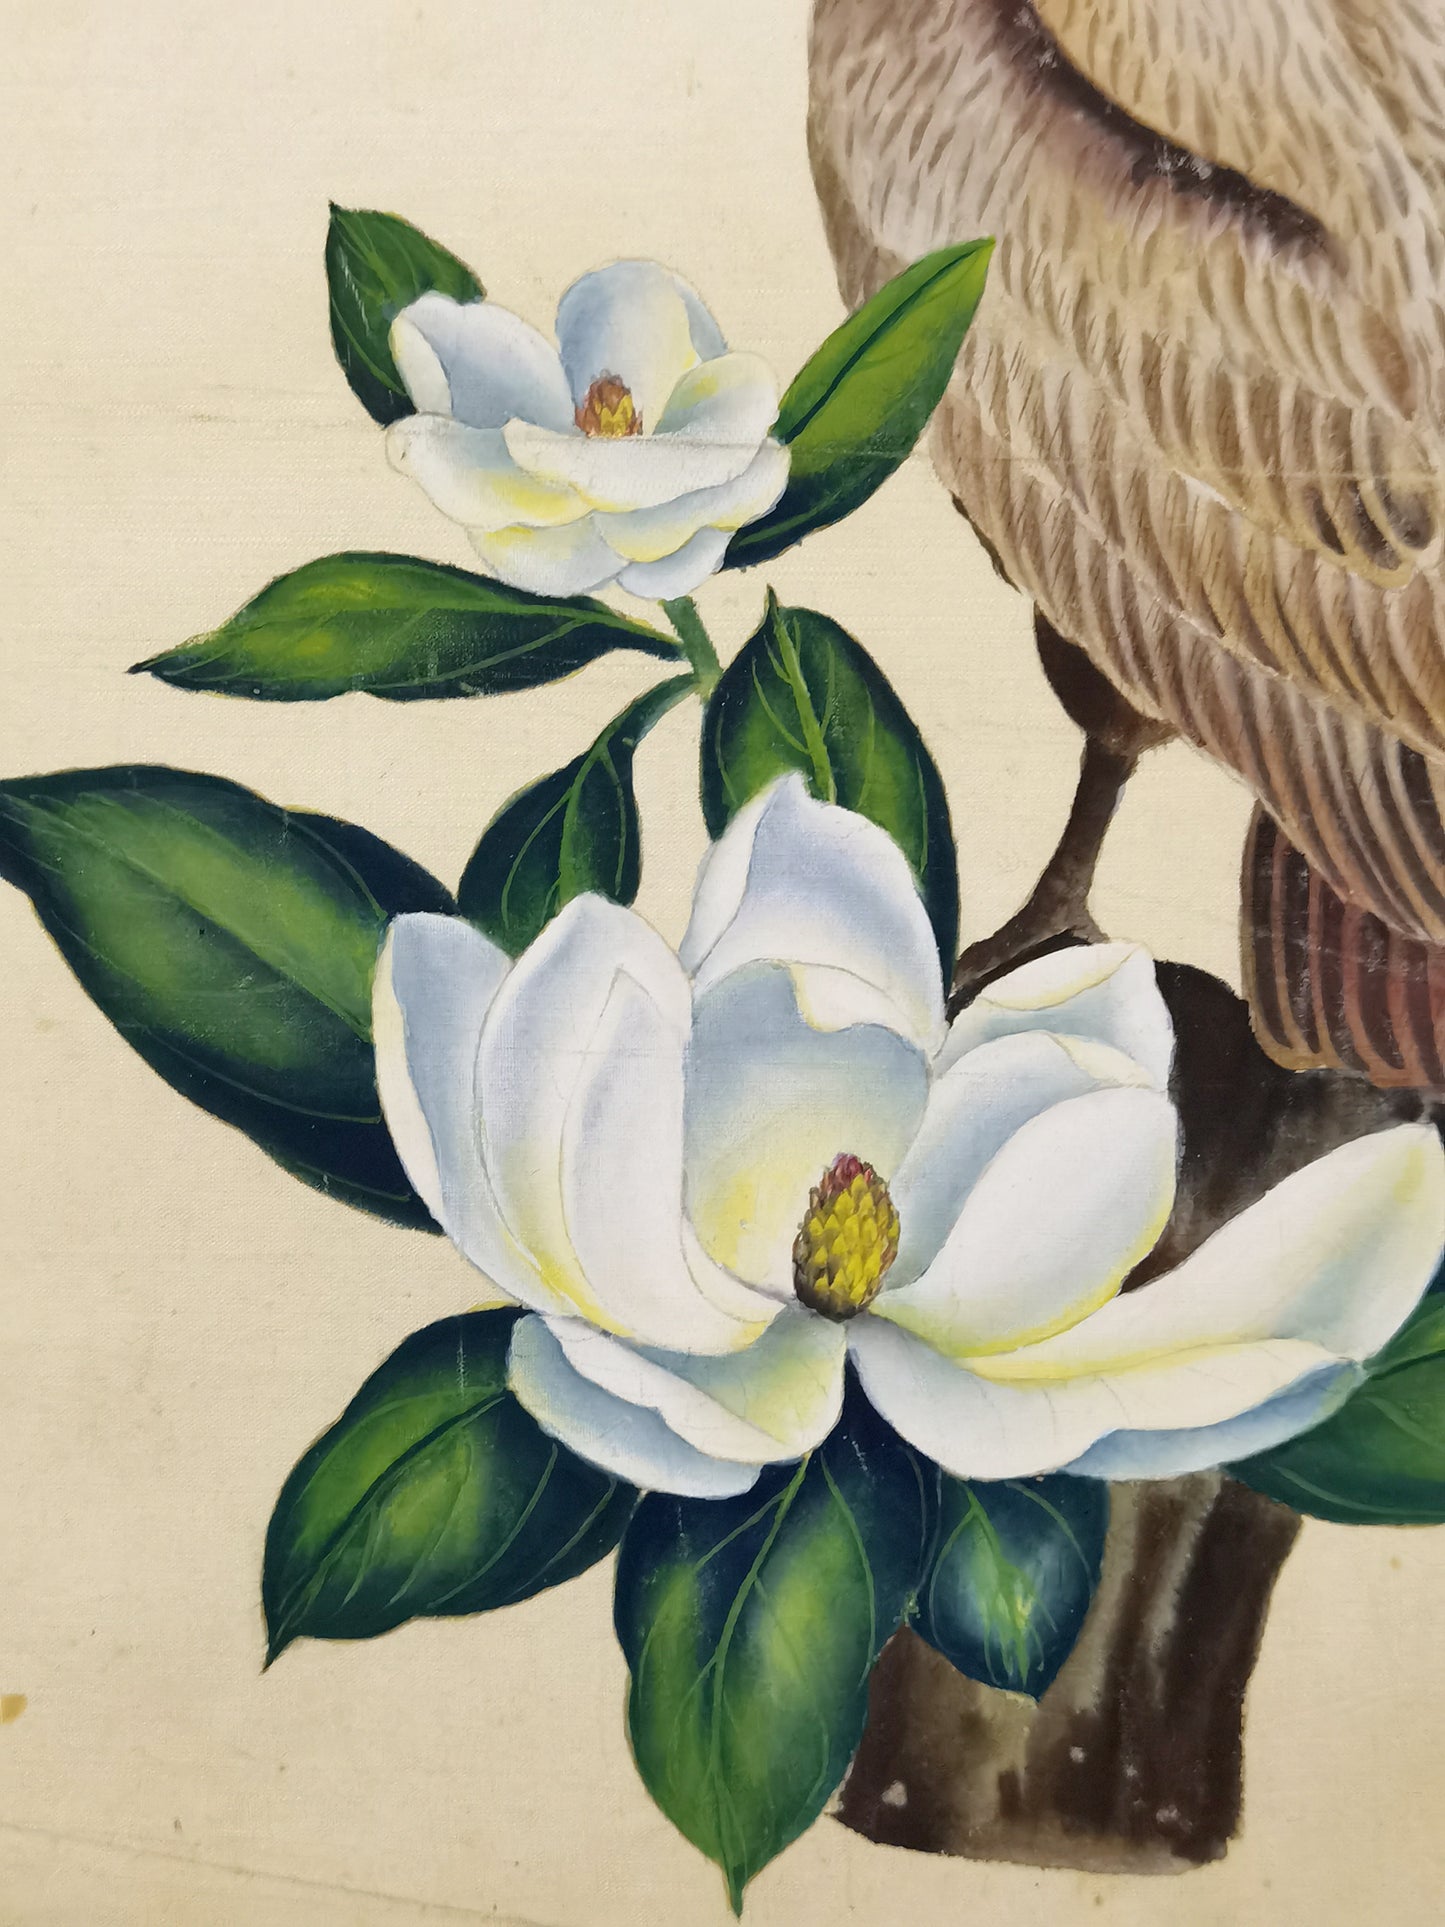 Eastern Brown Pelican State Bird Handmade Art Printing Louisiana Magnolia with Wood Frame